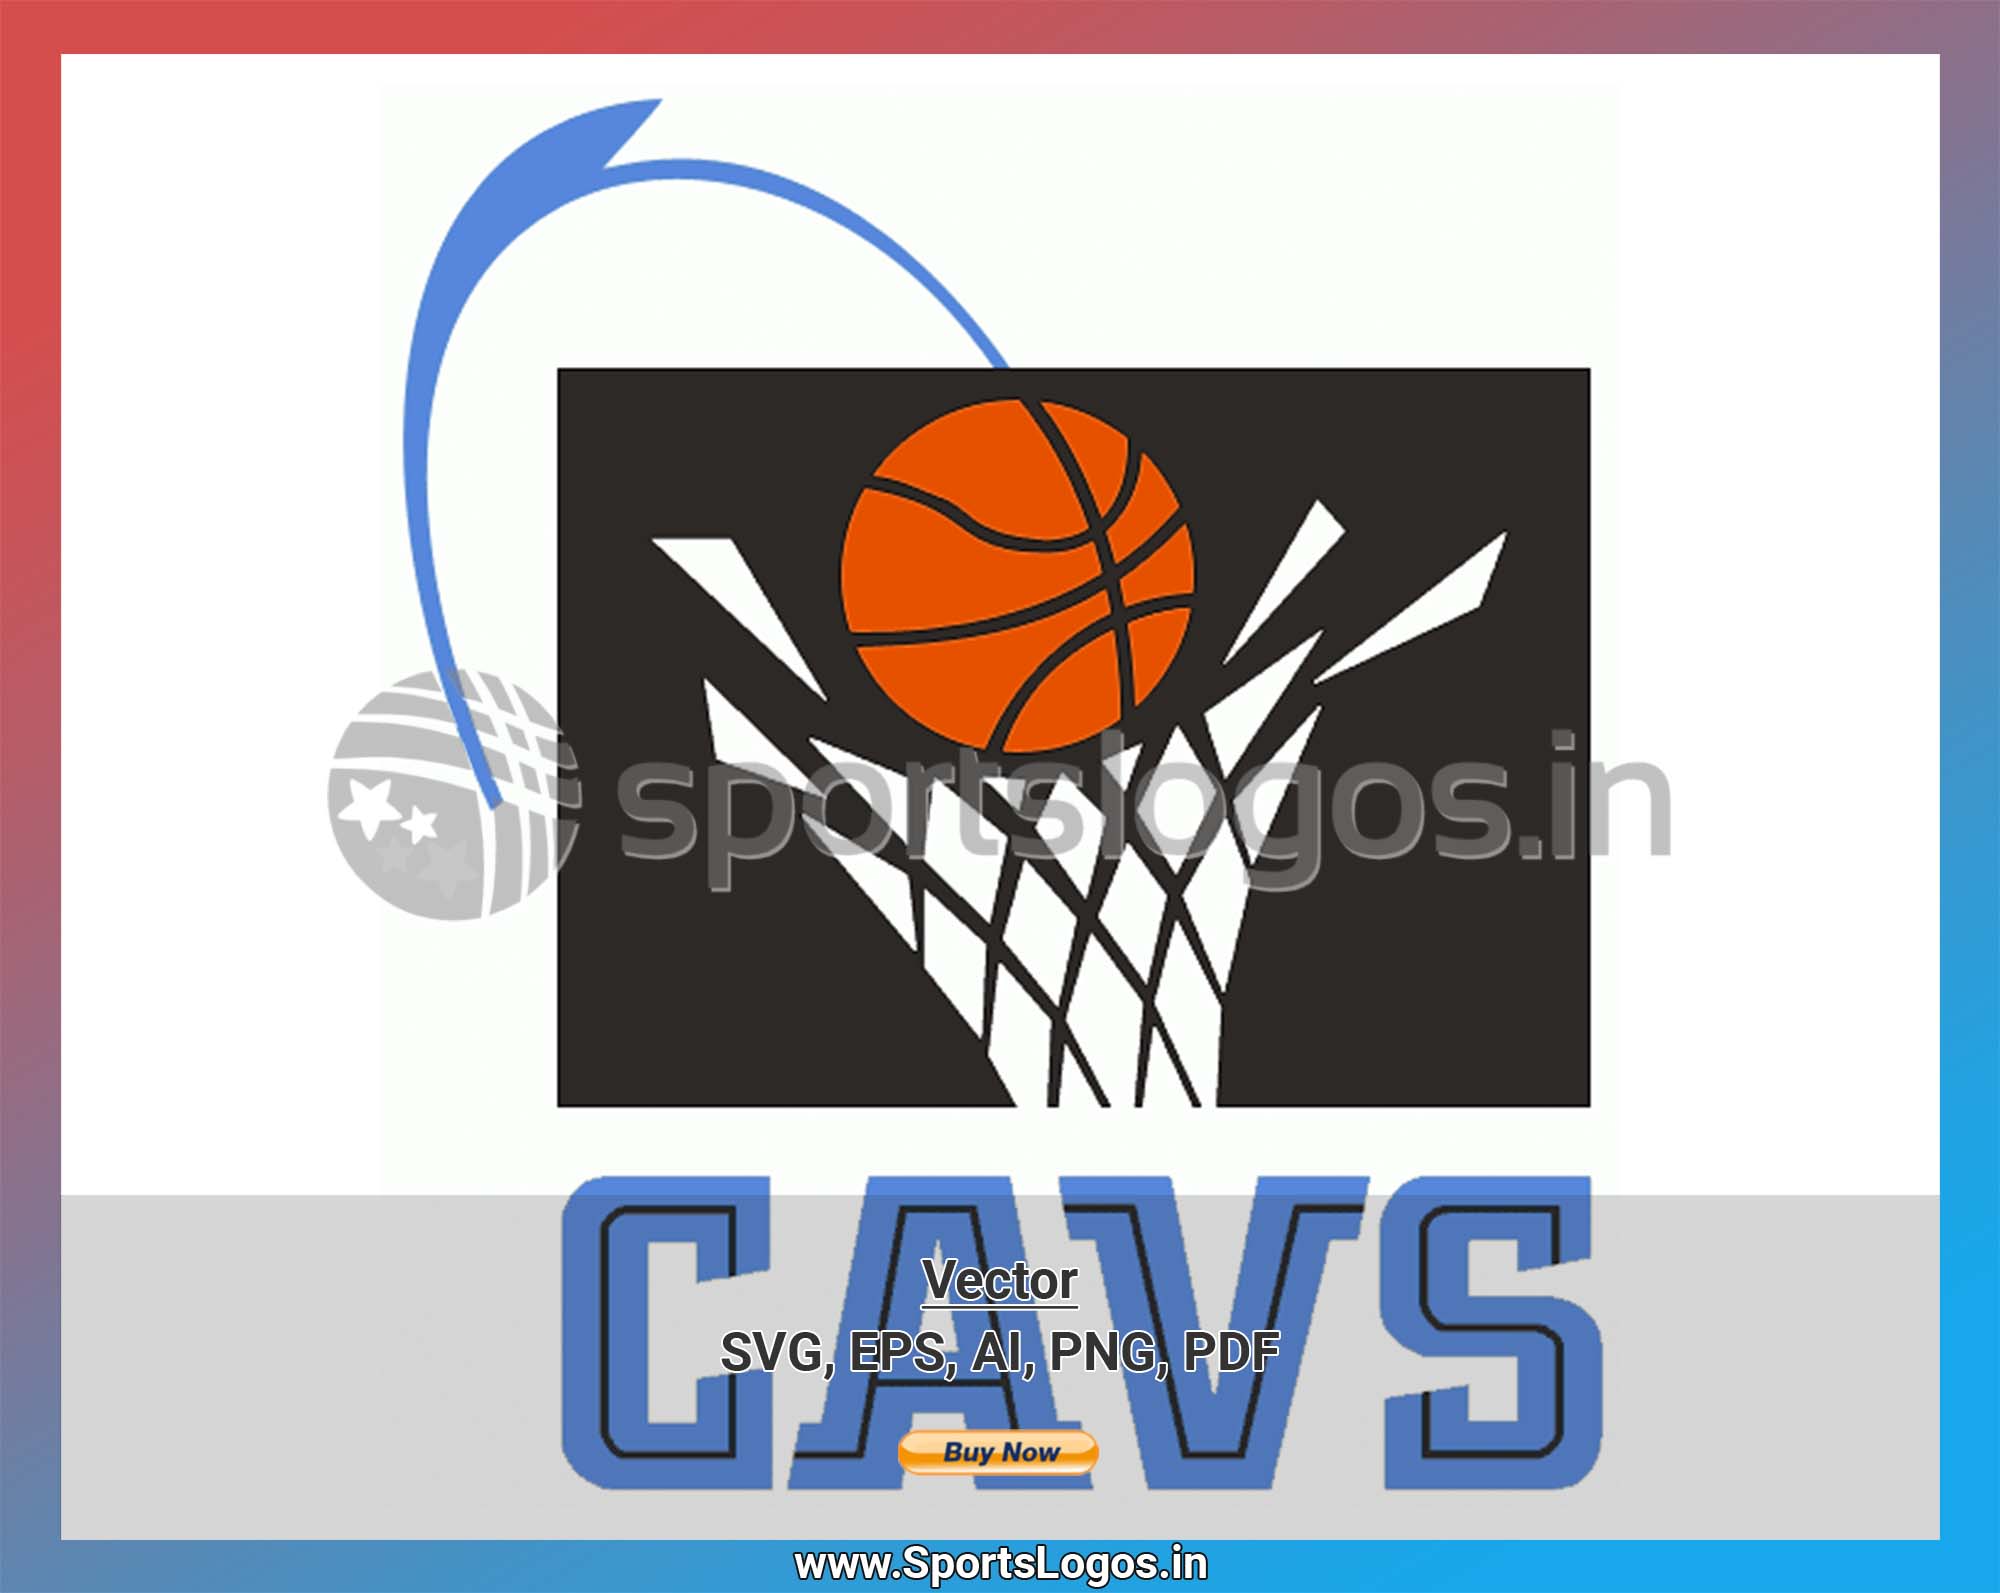 NBA Logo Cleveland Cavaliers, Cleveland Cavaliers SVG, Vector